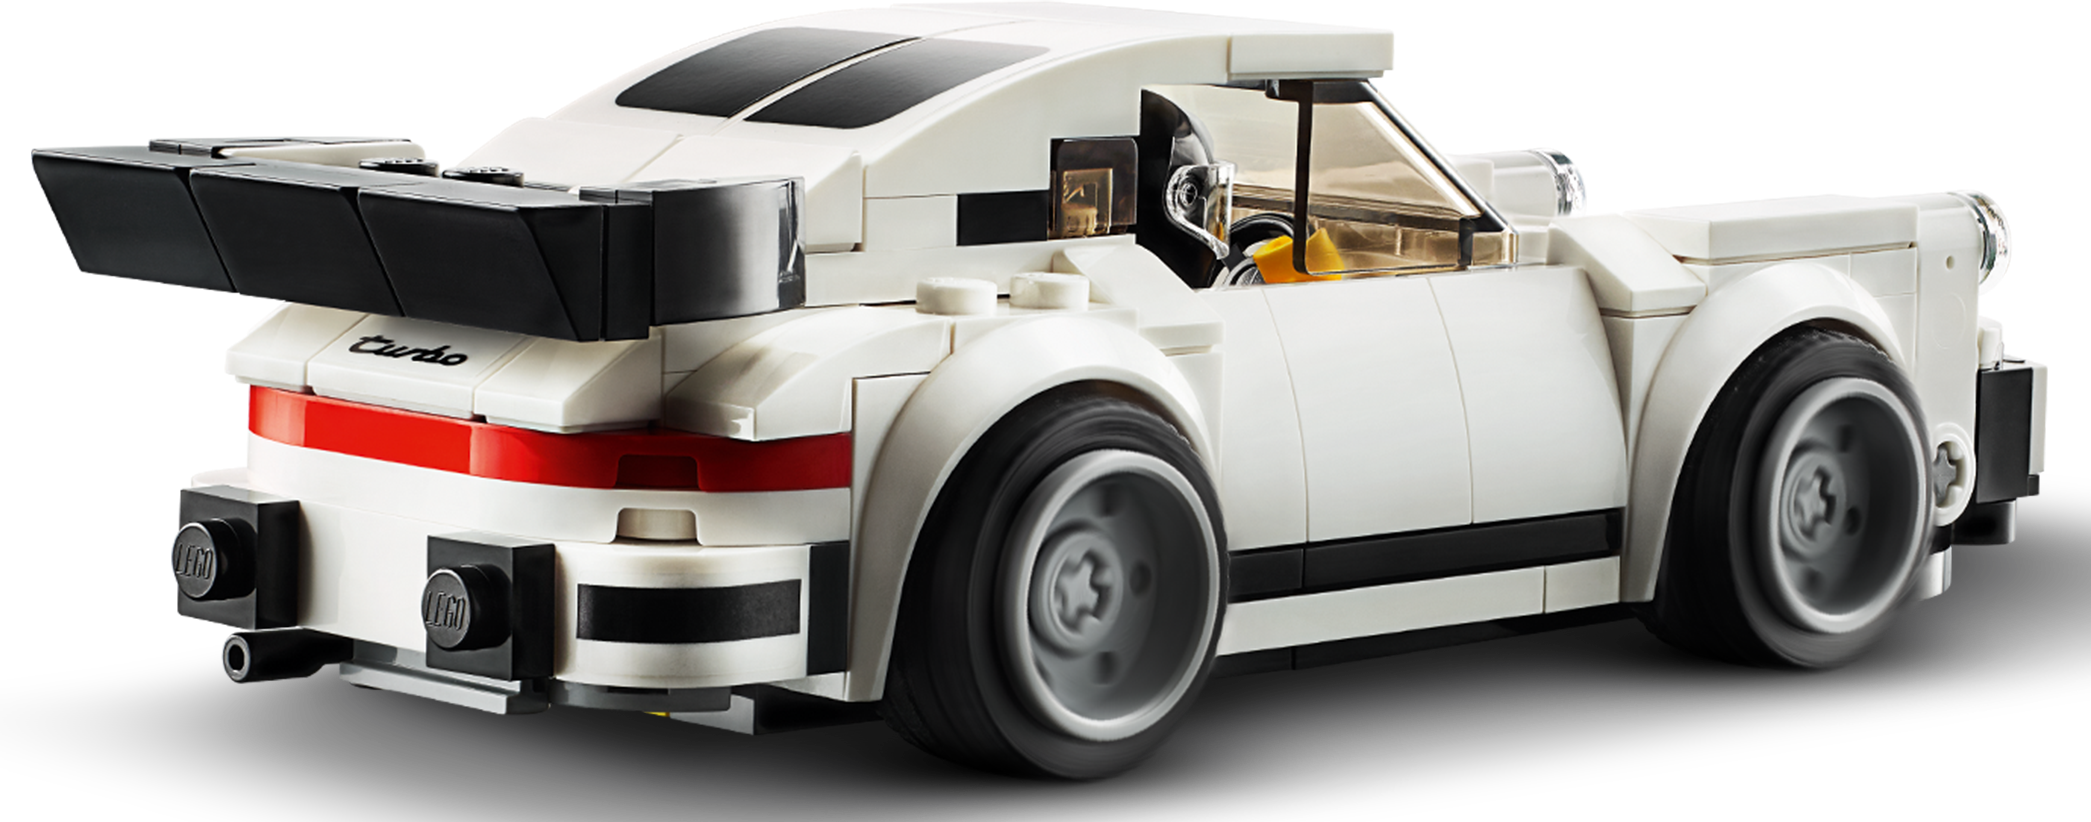 Porsche 911 turbo LEGO MOC, 245 pieces 8 studs wide speed c…